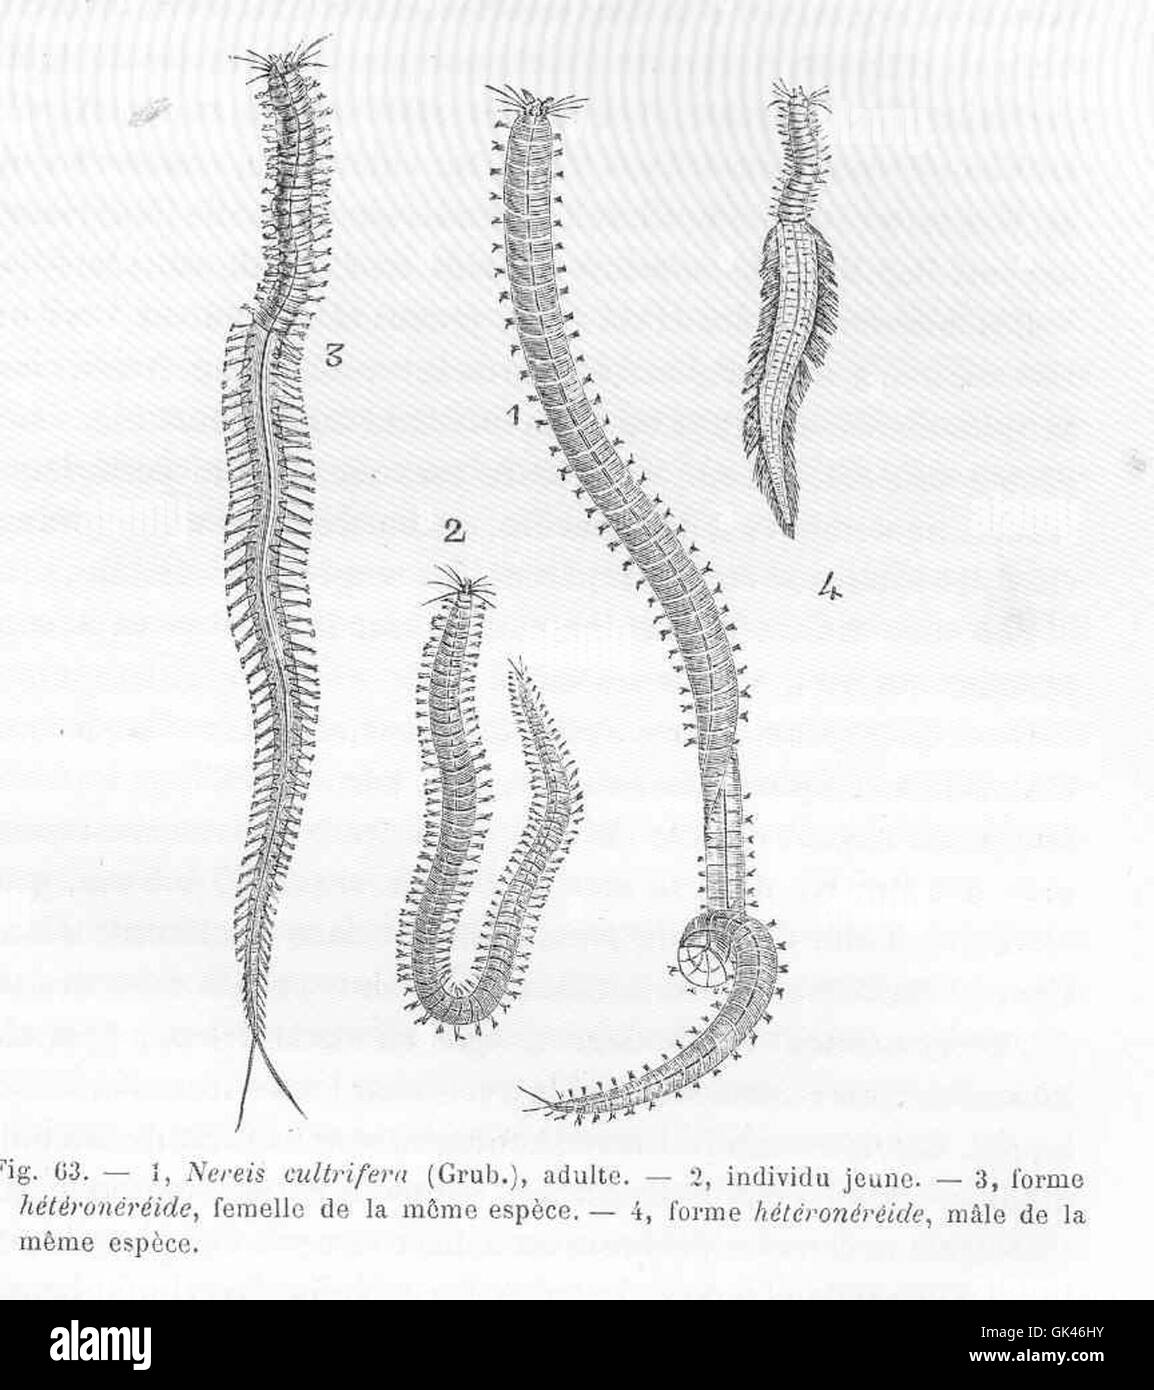 46975 1-Nereis cultrifera (Grub), adulte-- 2, individu jeune -- 3, forme heteronereide, femelle de la meme espece -- 4, forme Stock Photo